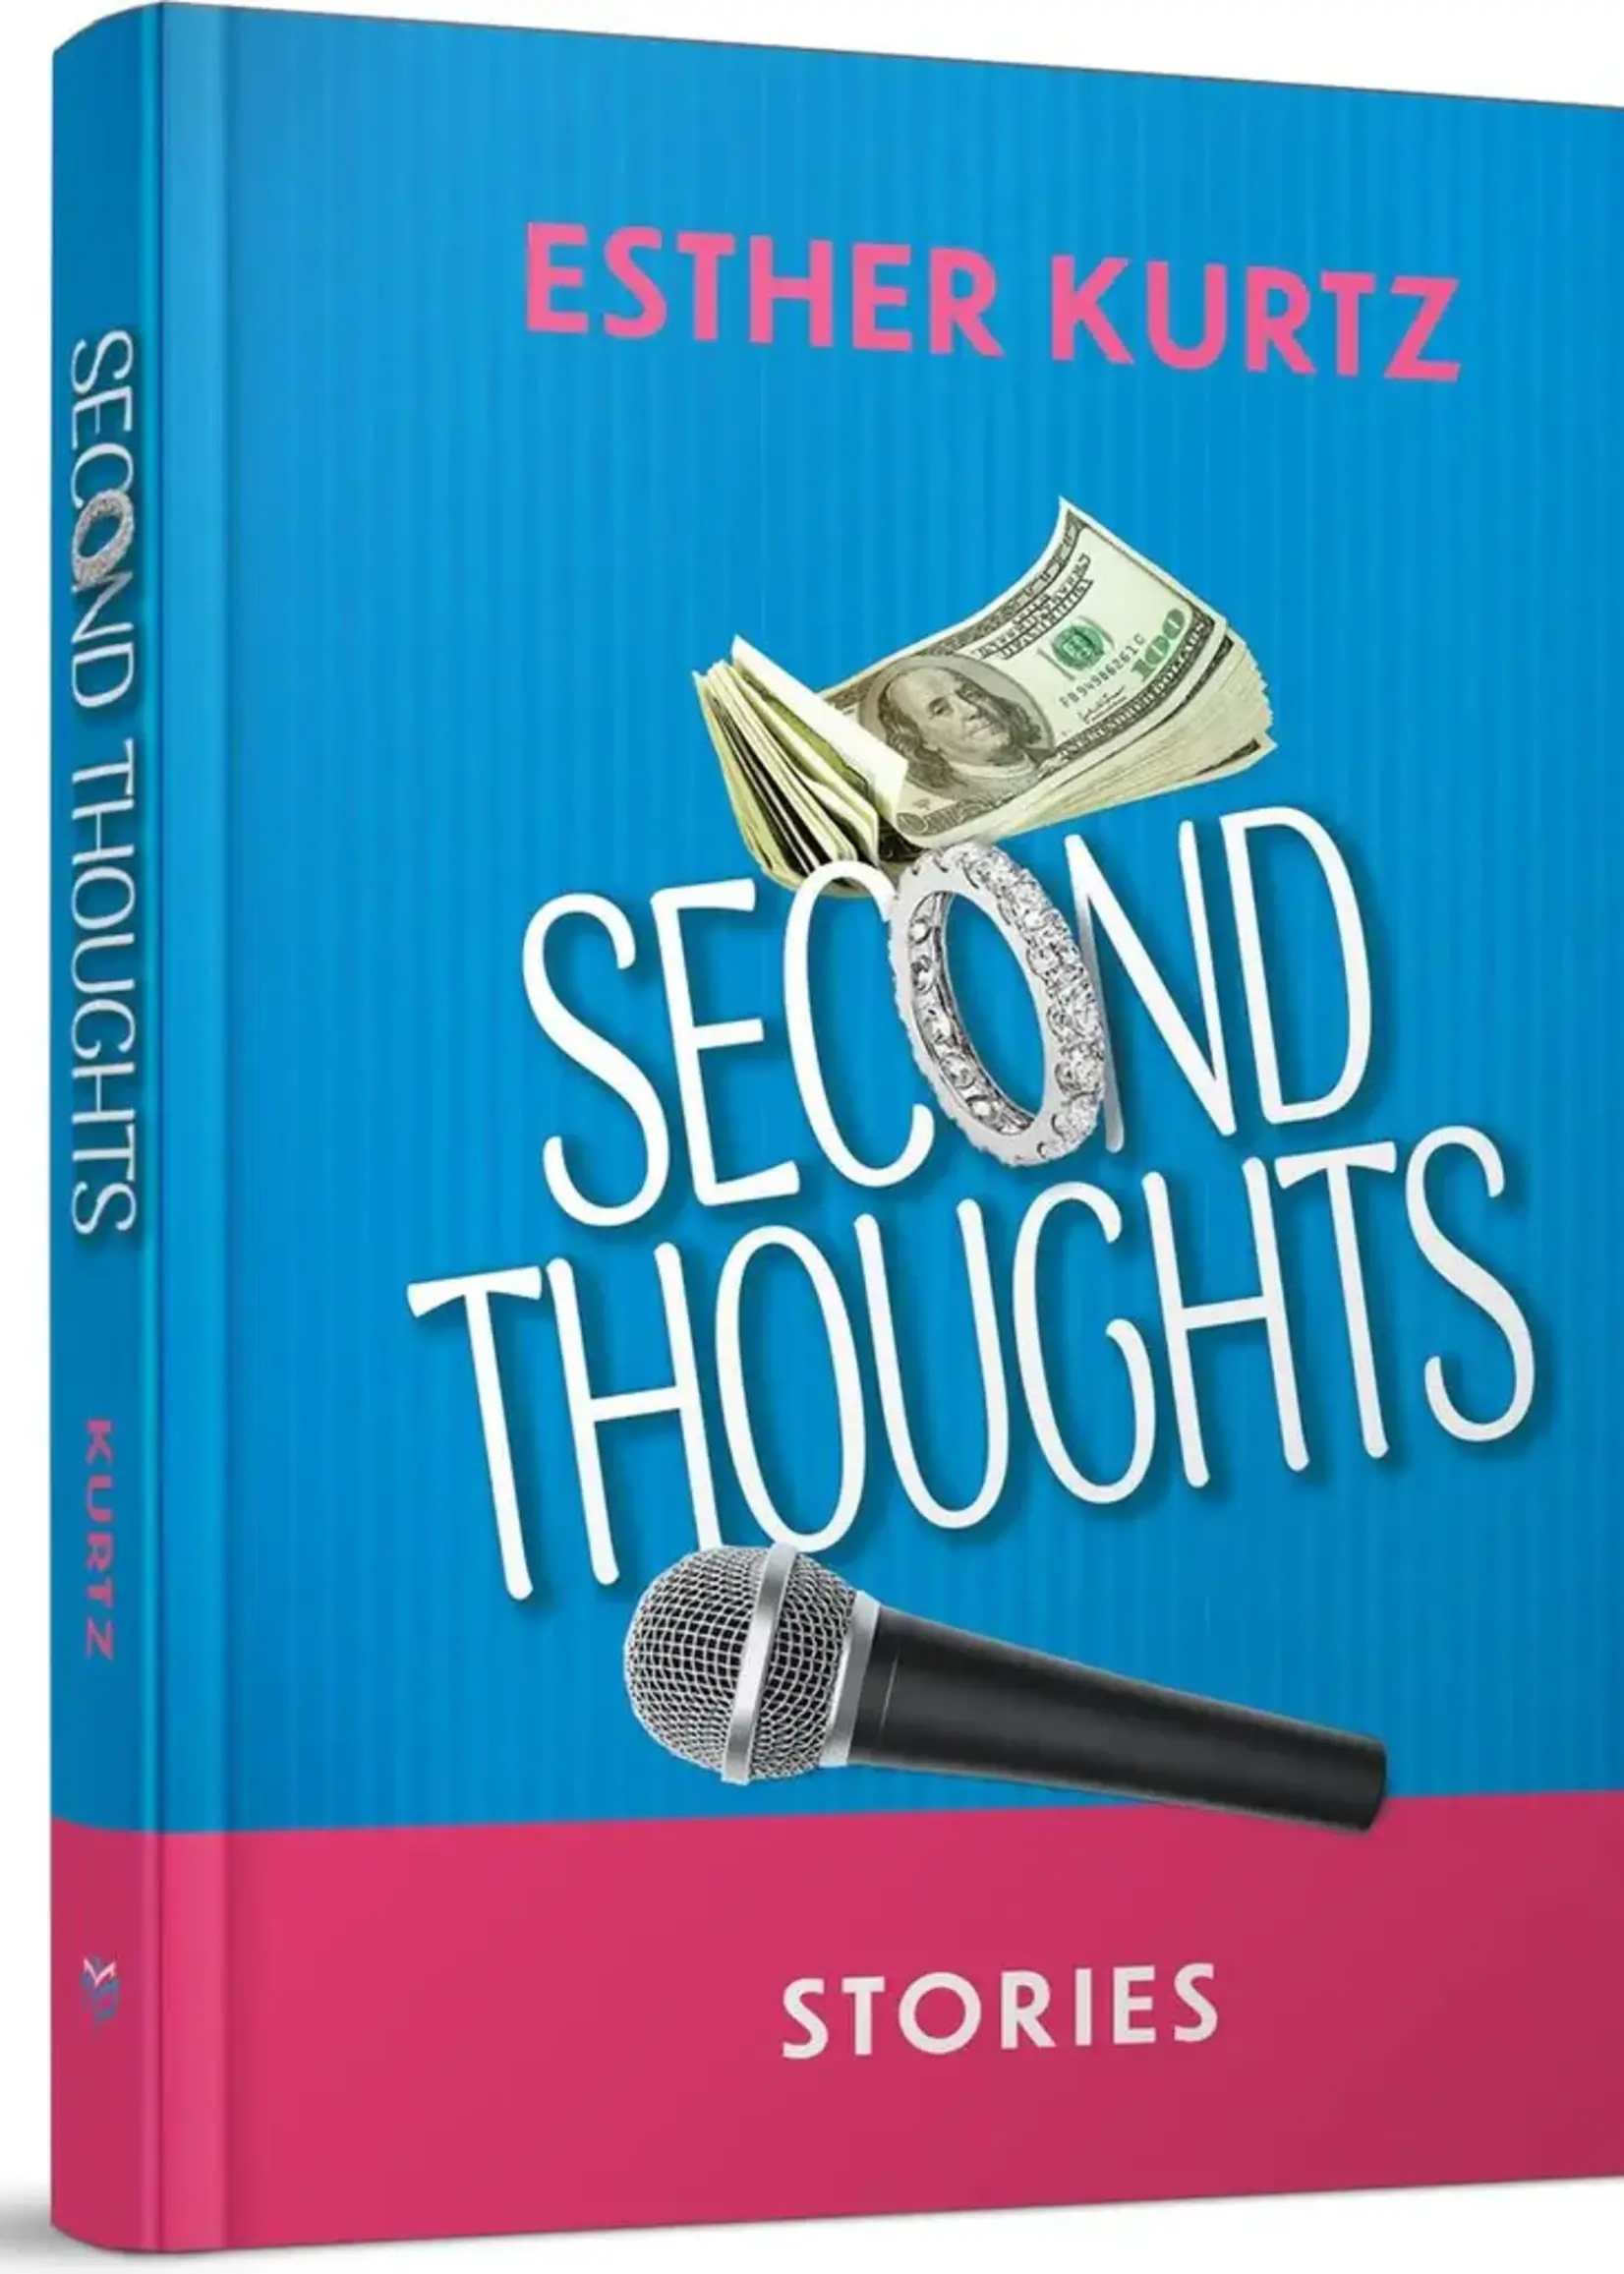 Esther Kurtz Second Thoughts